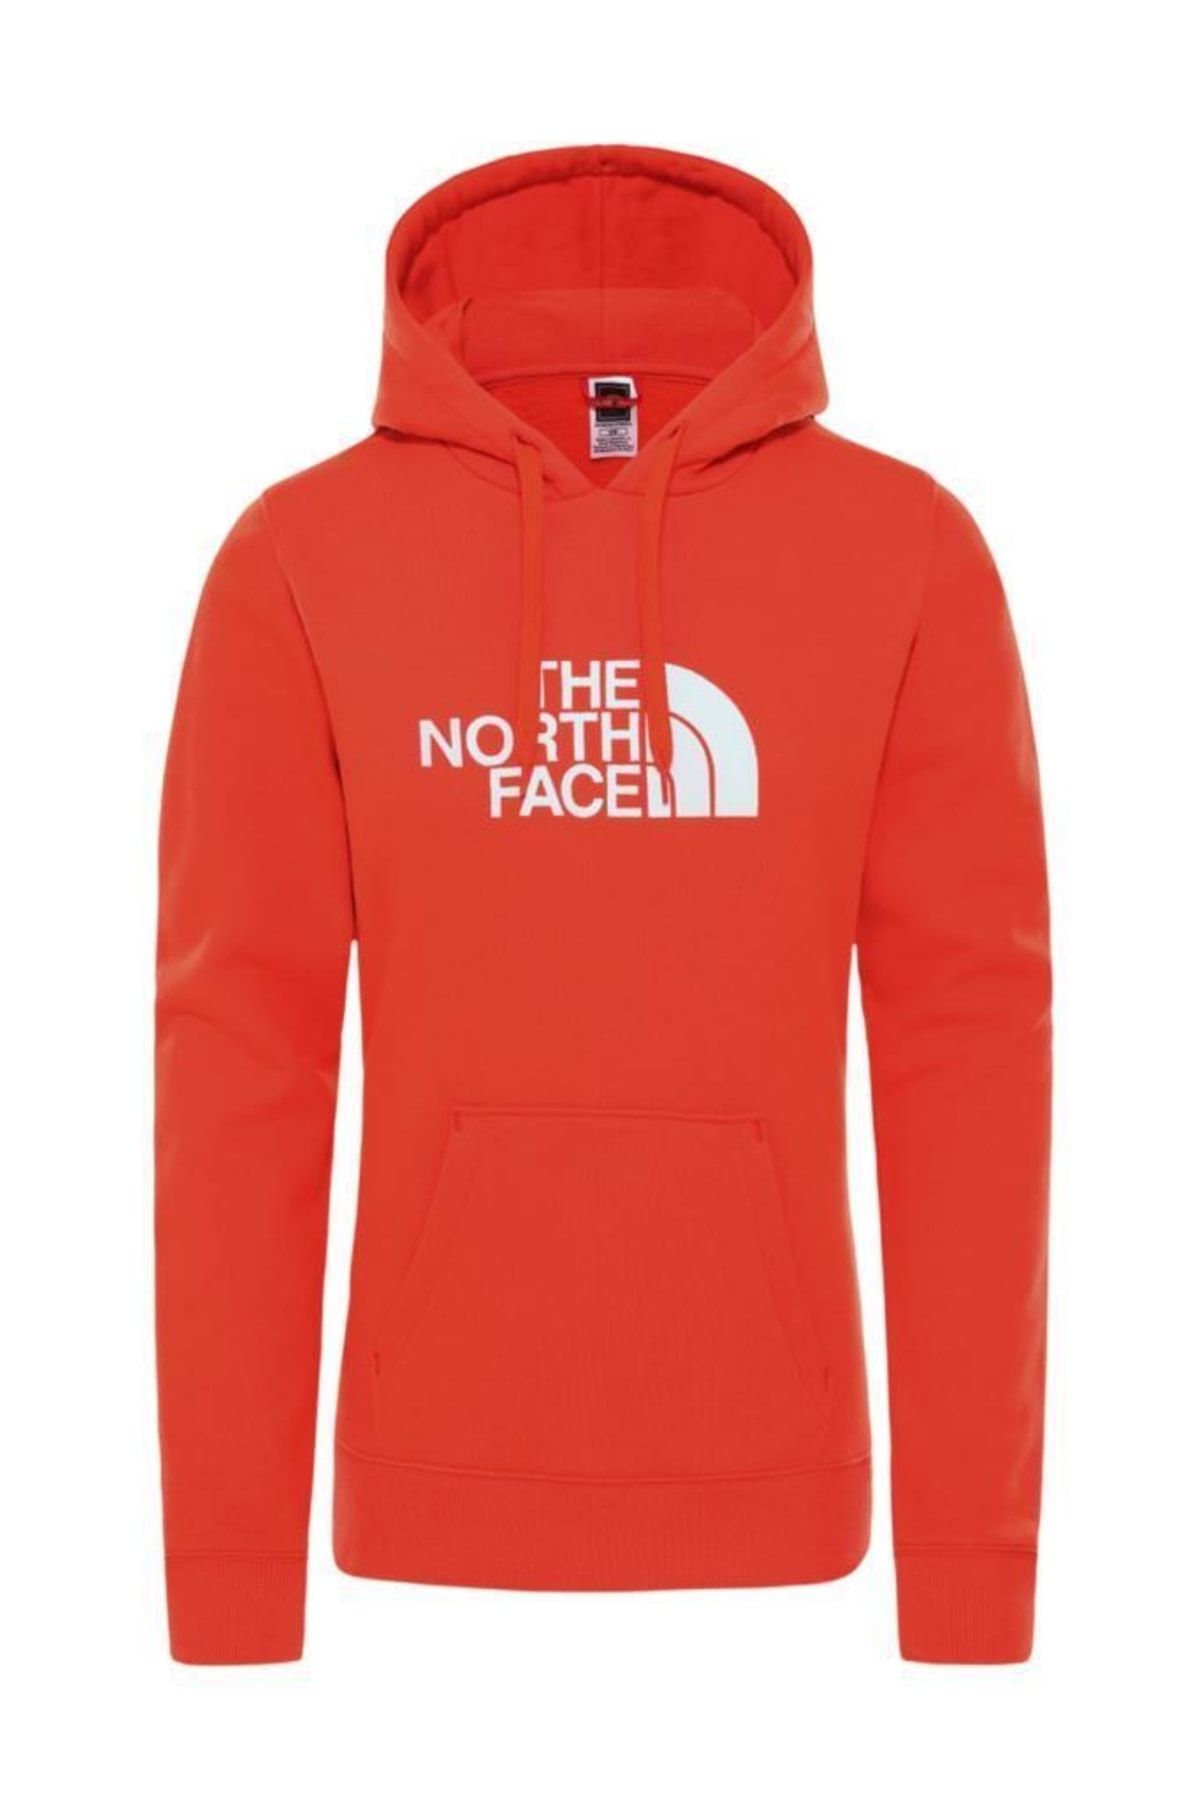 The North Face Drew Peak Pullover Hoodie Kadın Sweatshirt Kırmızı